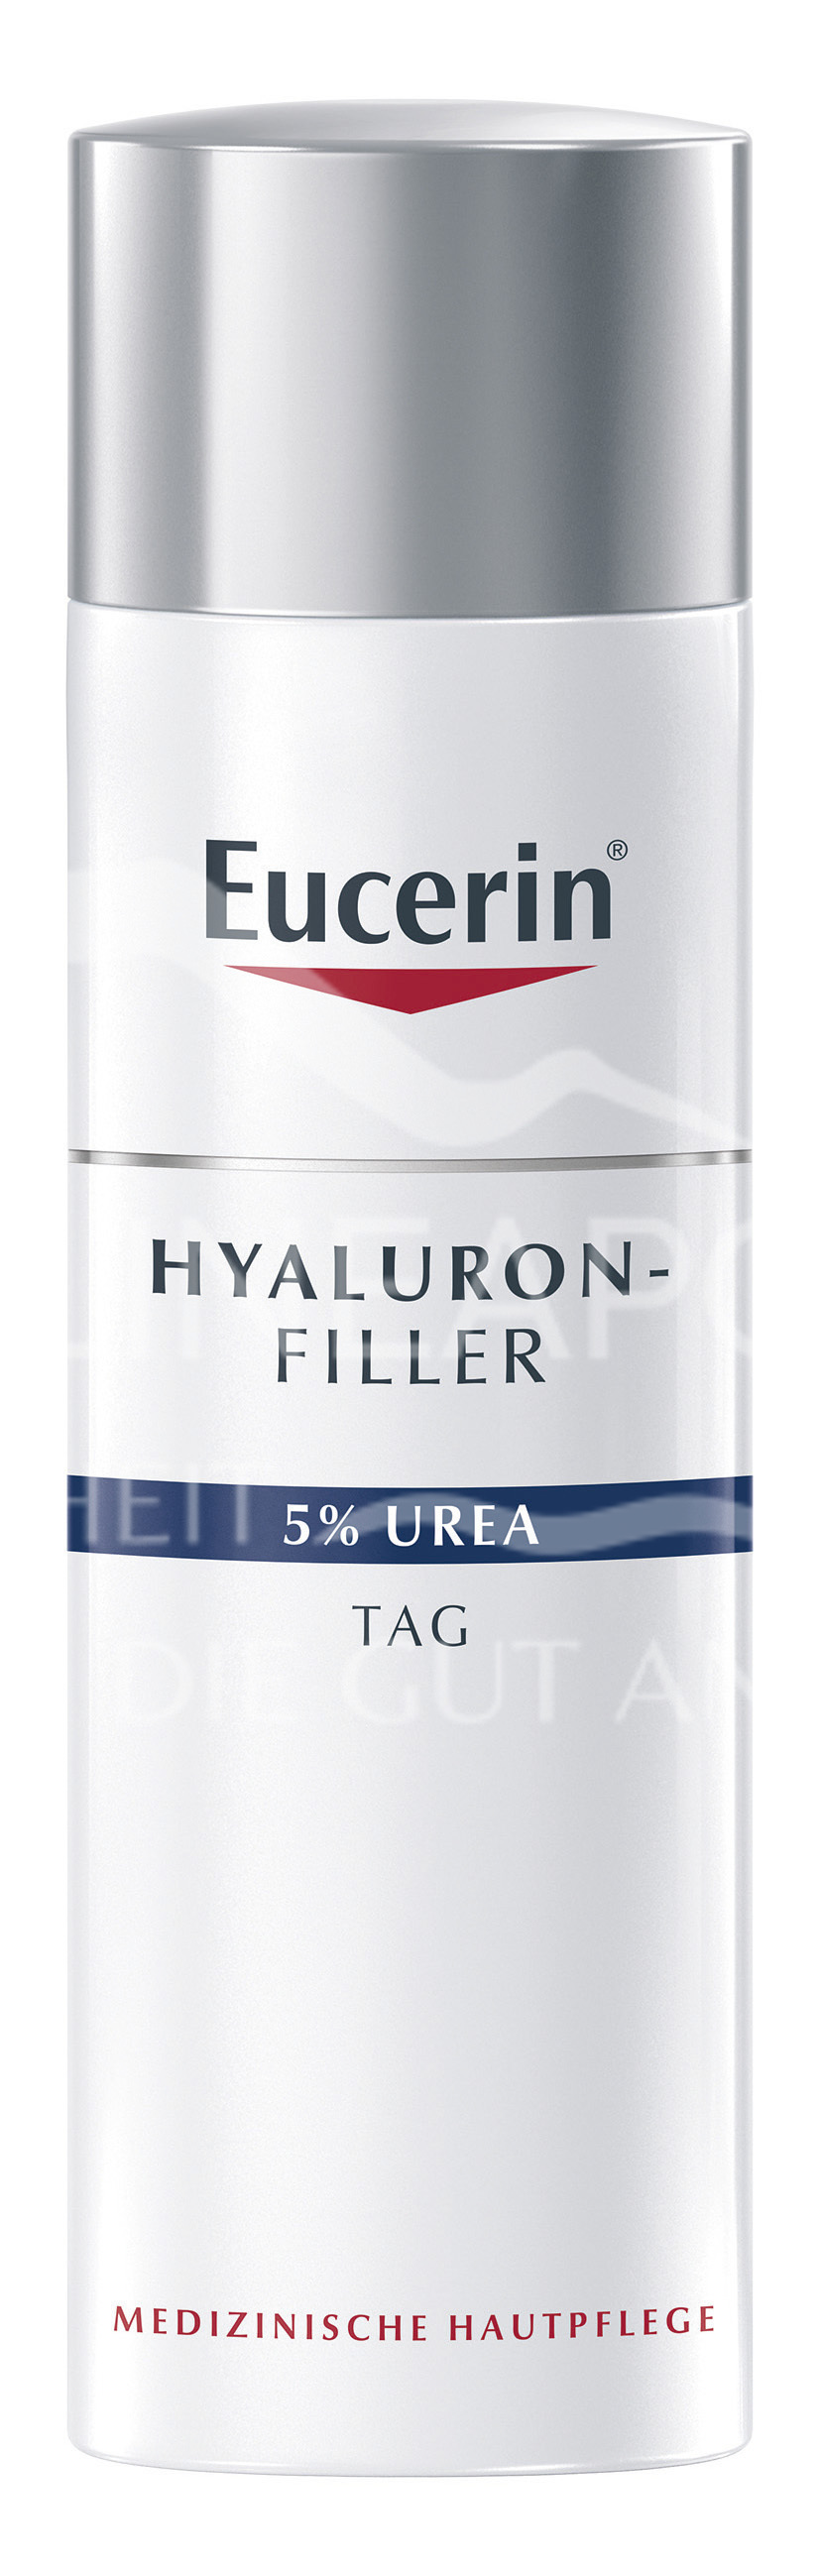 Eucerin® HYALURON-FILLER 5% Urea Tagescreme